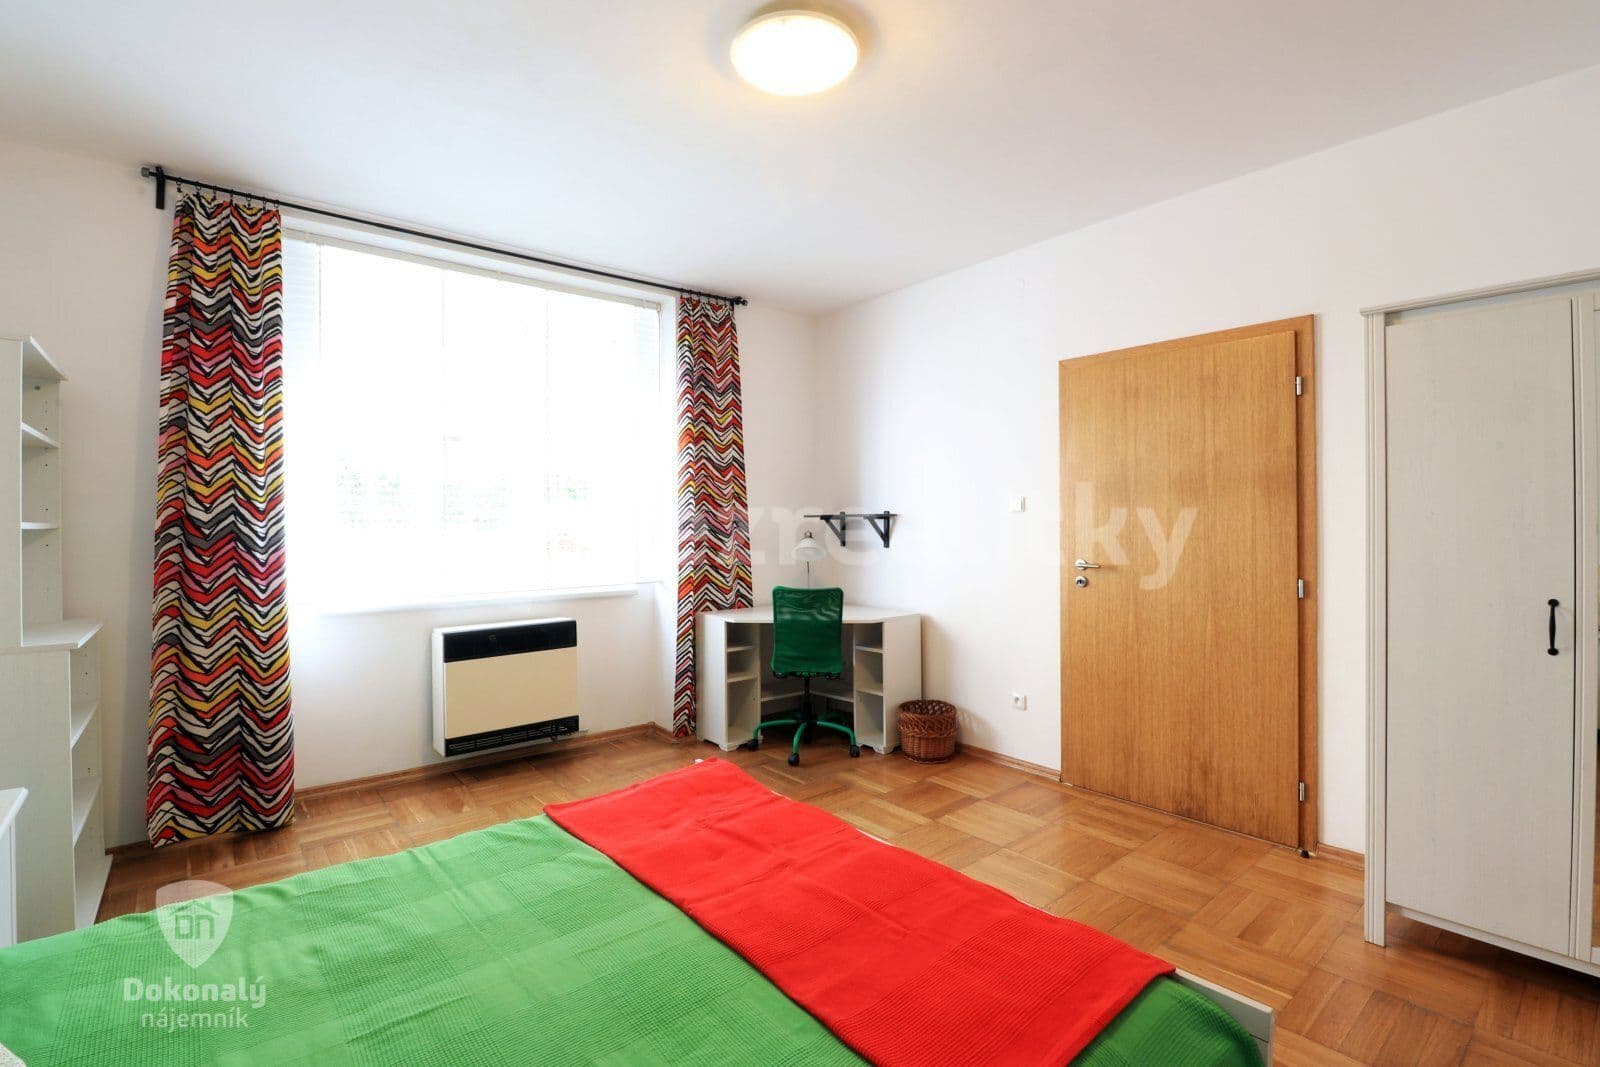 1 bedroom with open-plan kitchen flat to rent, 48 m², Baranova, Prague, Prague